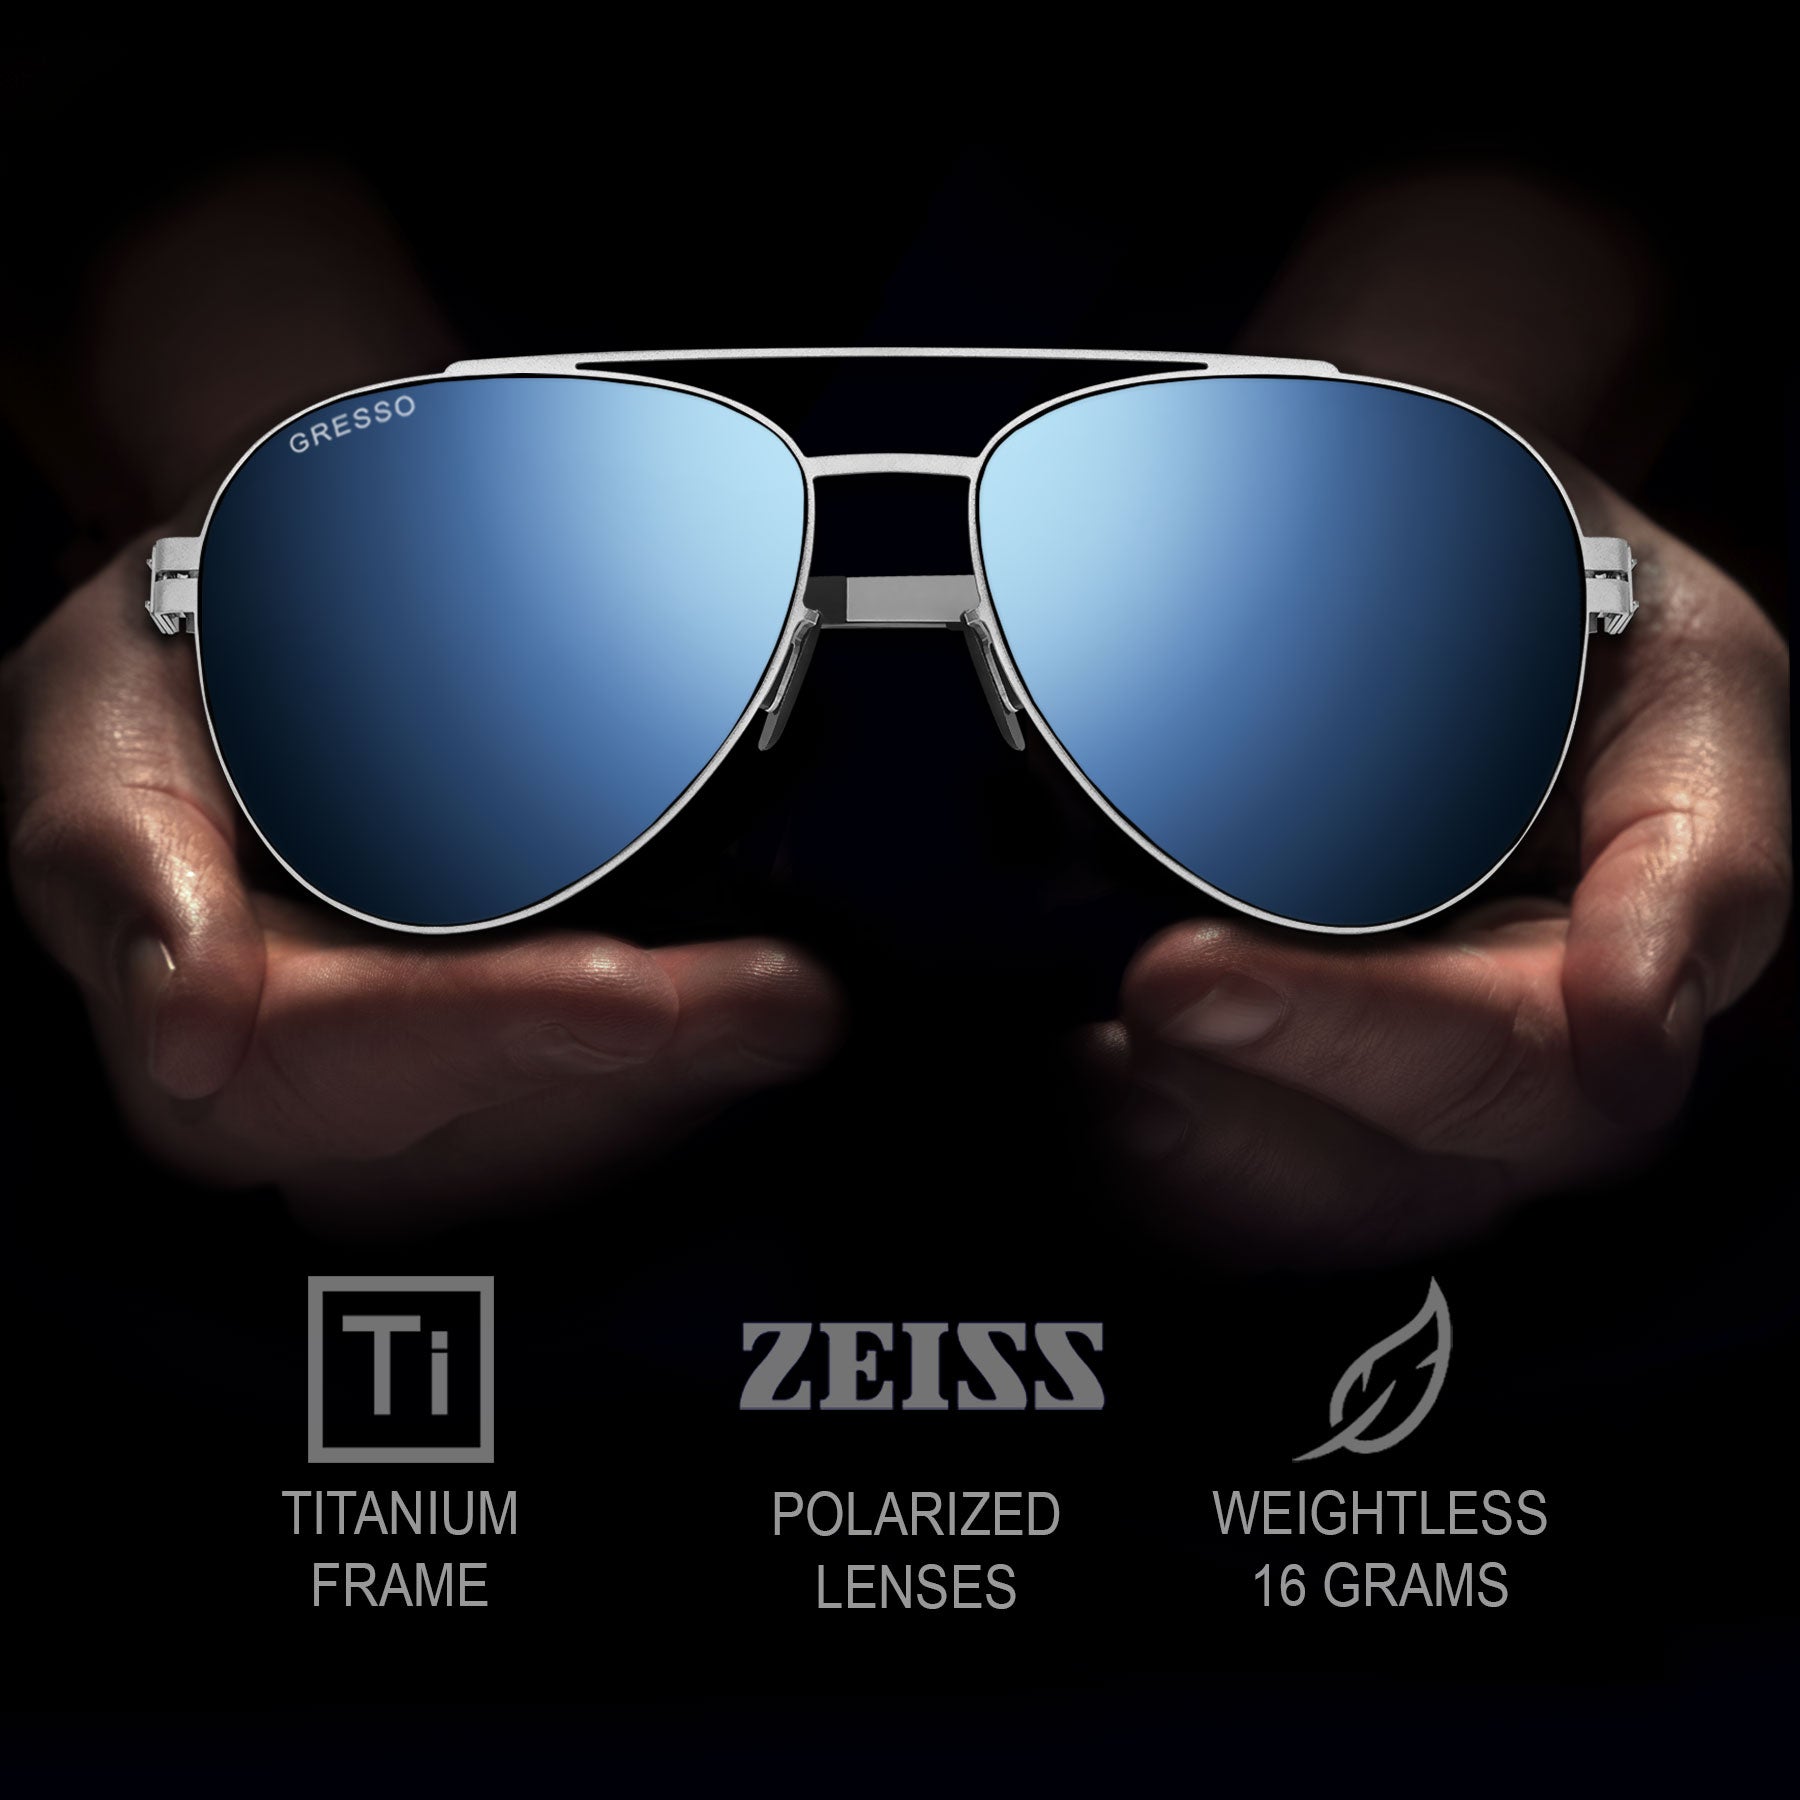 GRESSO Titanium Polarized Aviator Sunglasses - California, Blue-Mirror